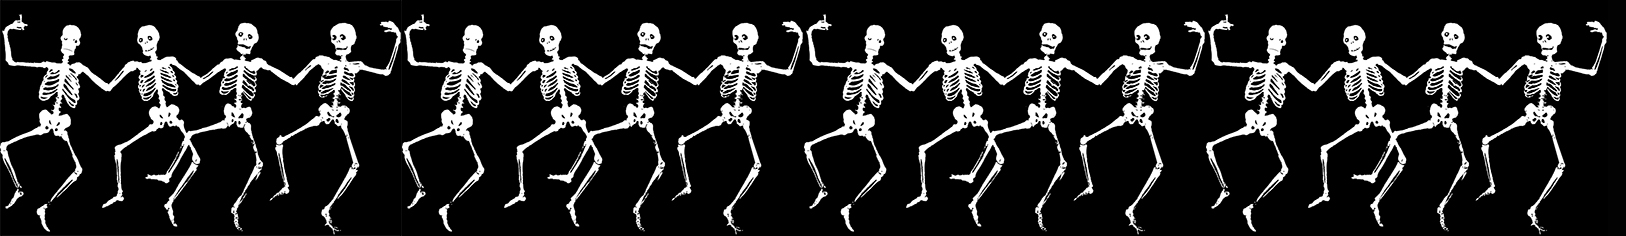 Halloween border with dancing skeletons